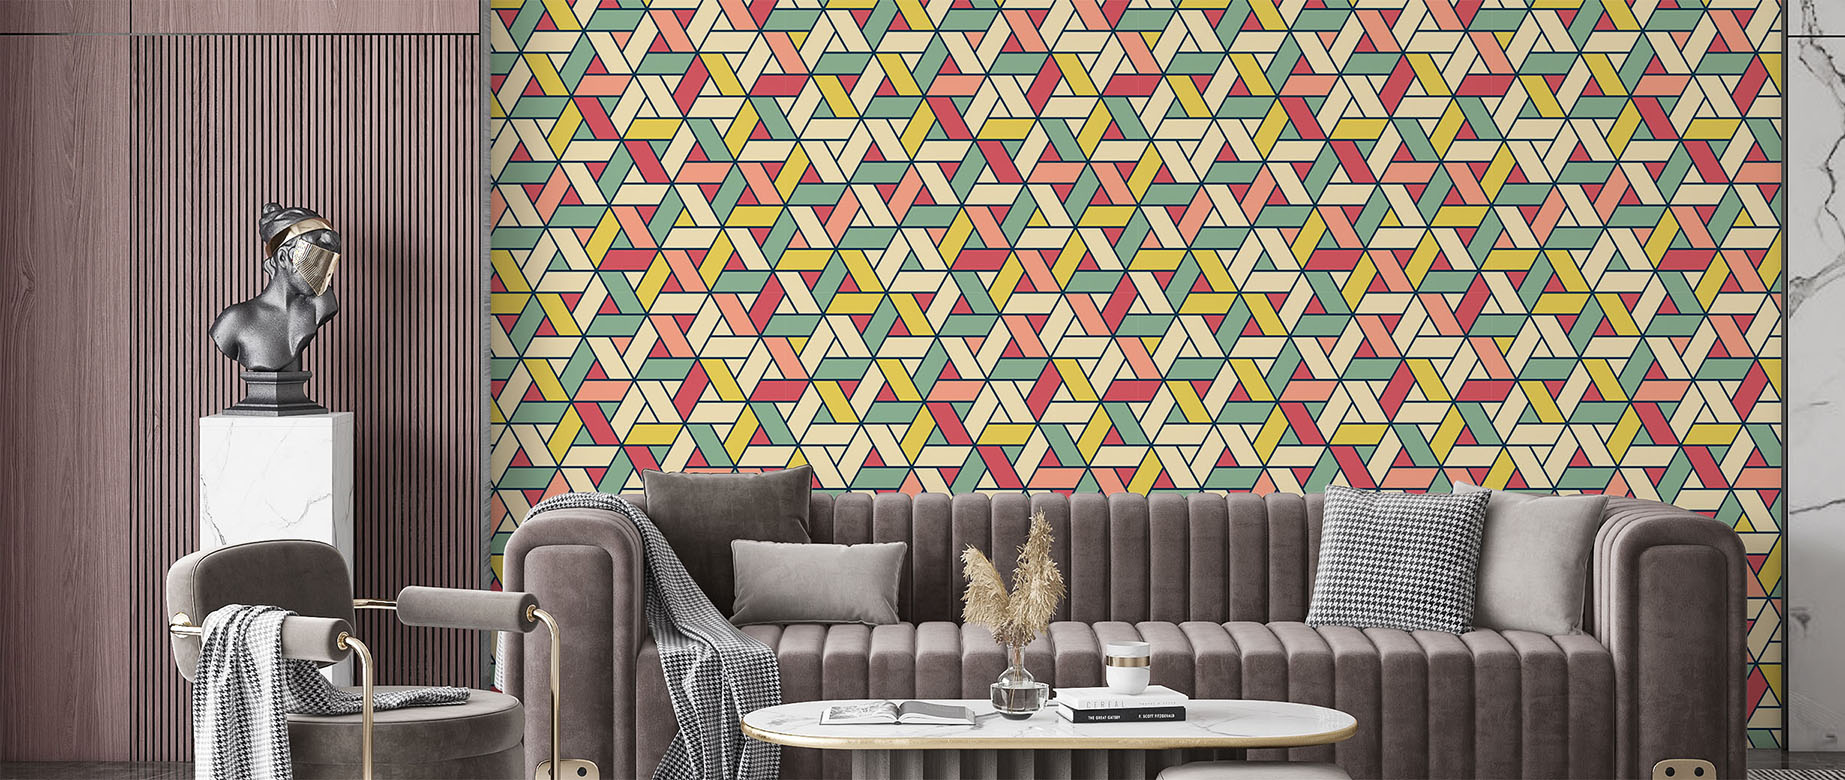 beige-geometric-design-Seamless design repeat pattern wallpaper-in-wide-room